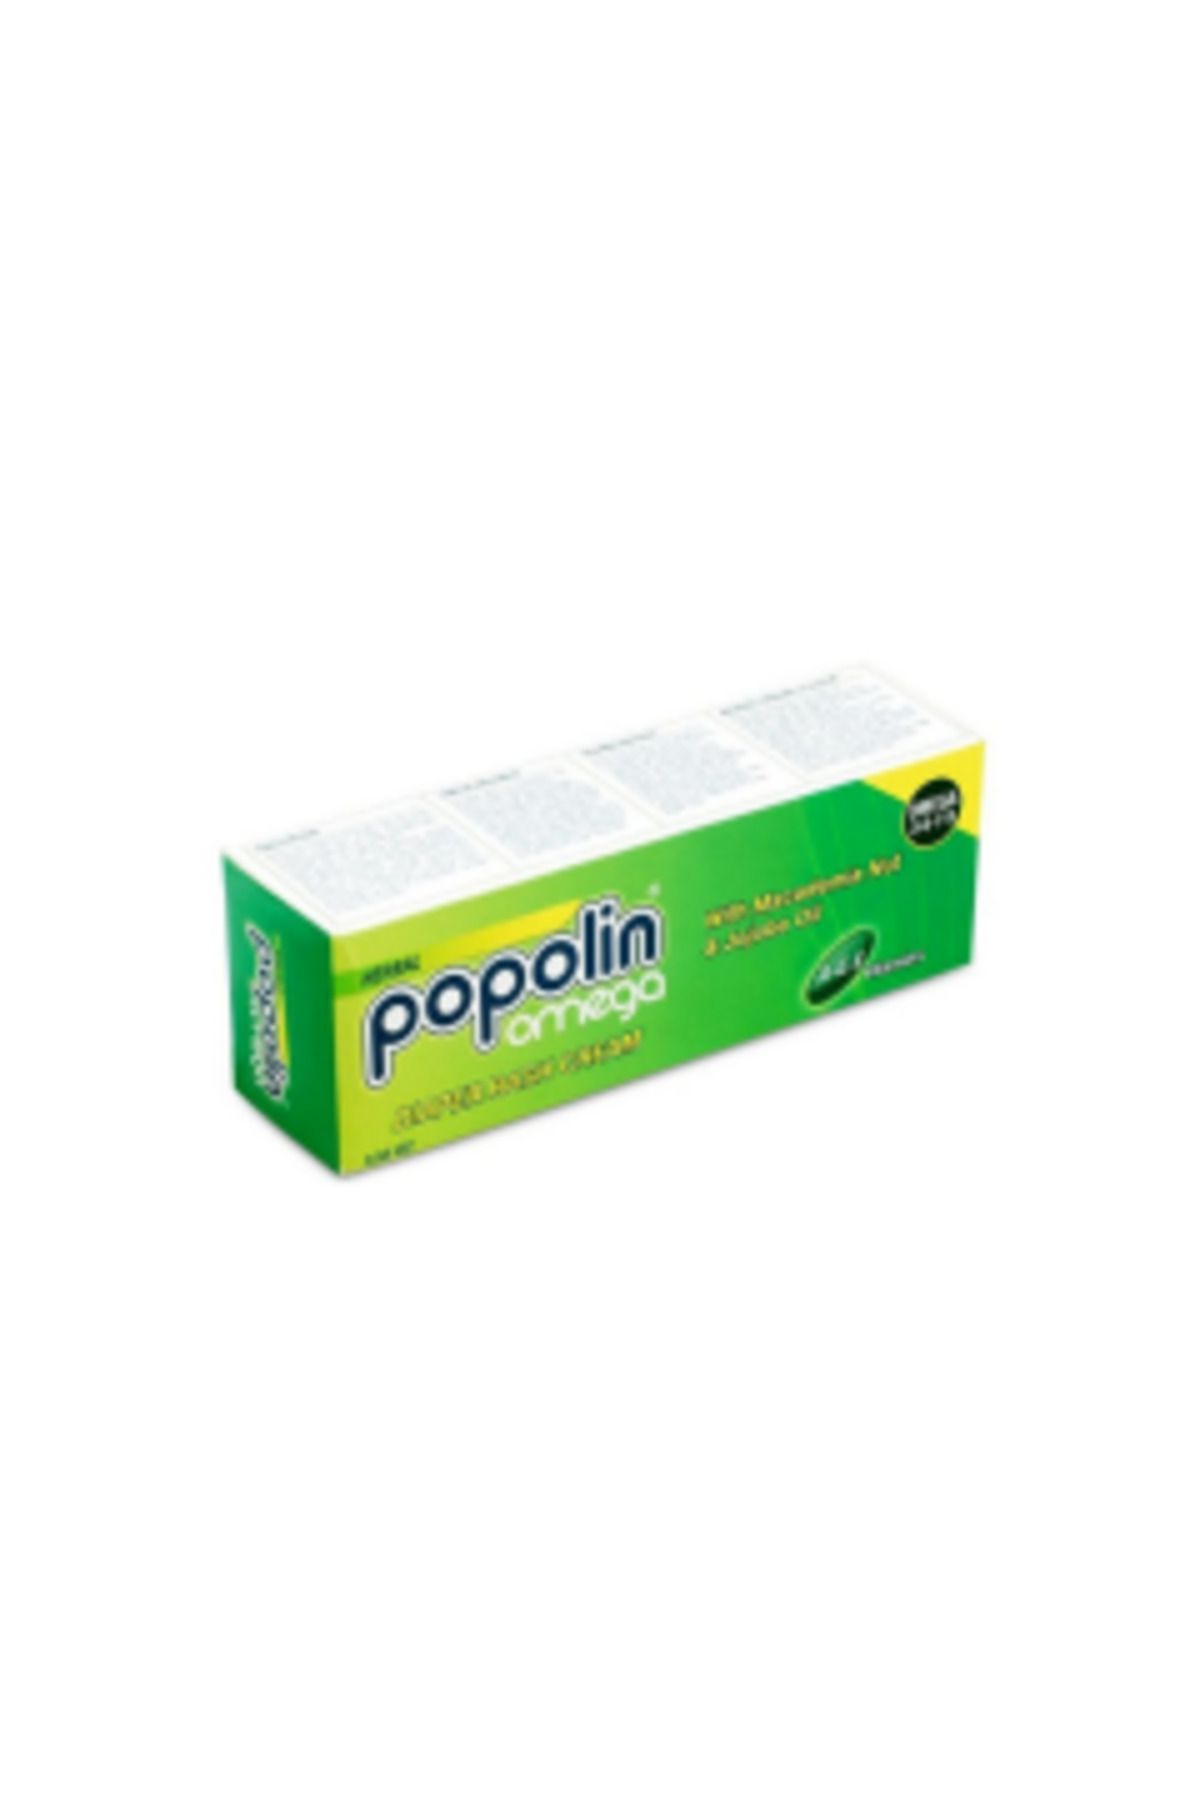 Popolin Omega Pişik Kremi 100gr ( 1 ADET )